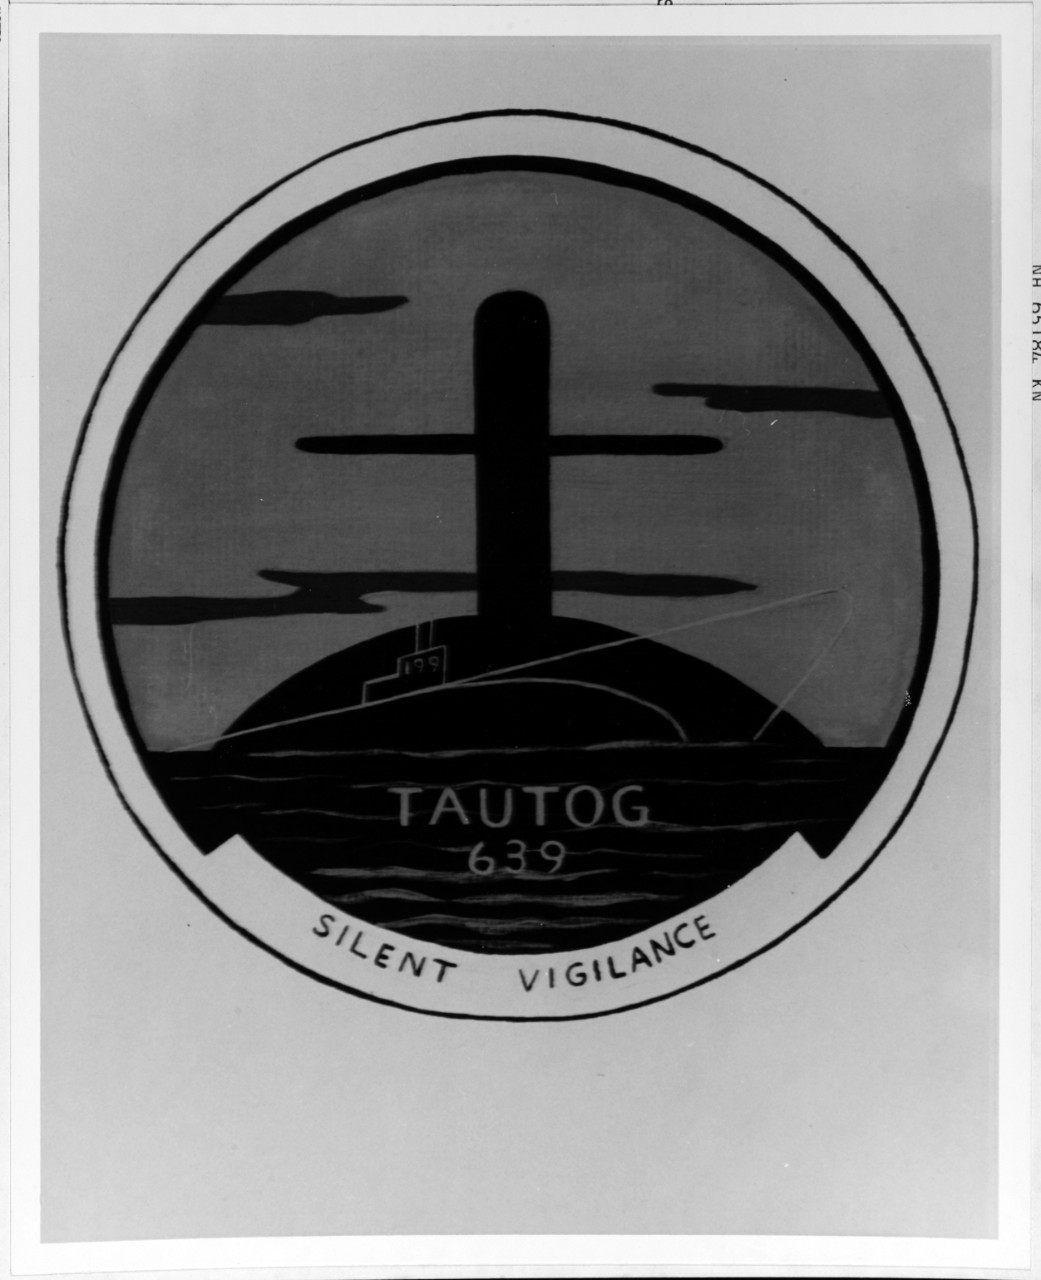 Insignia: USS TAUTOG (SSN-639)